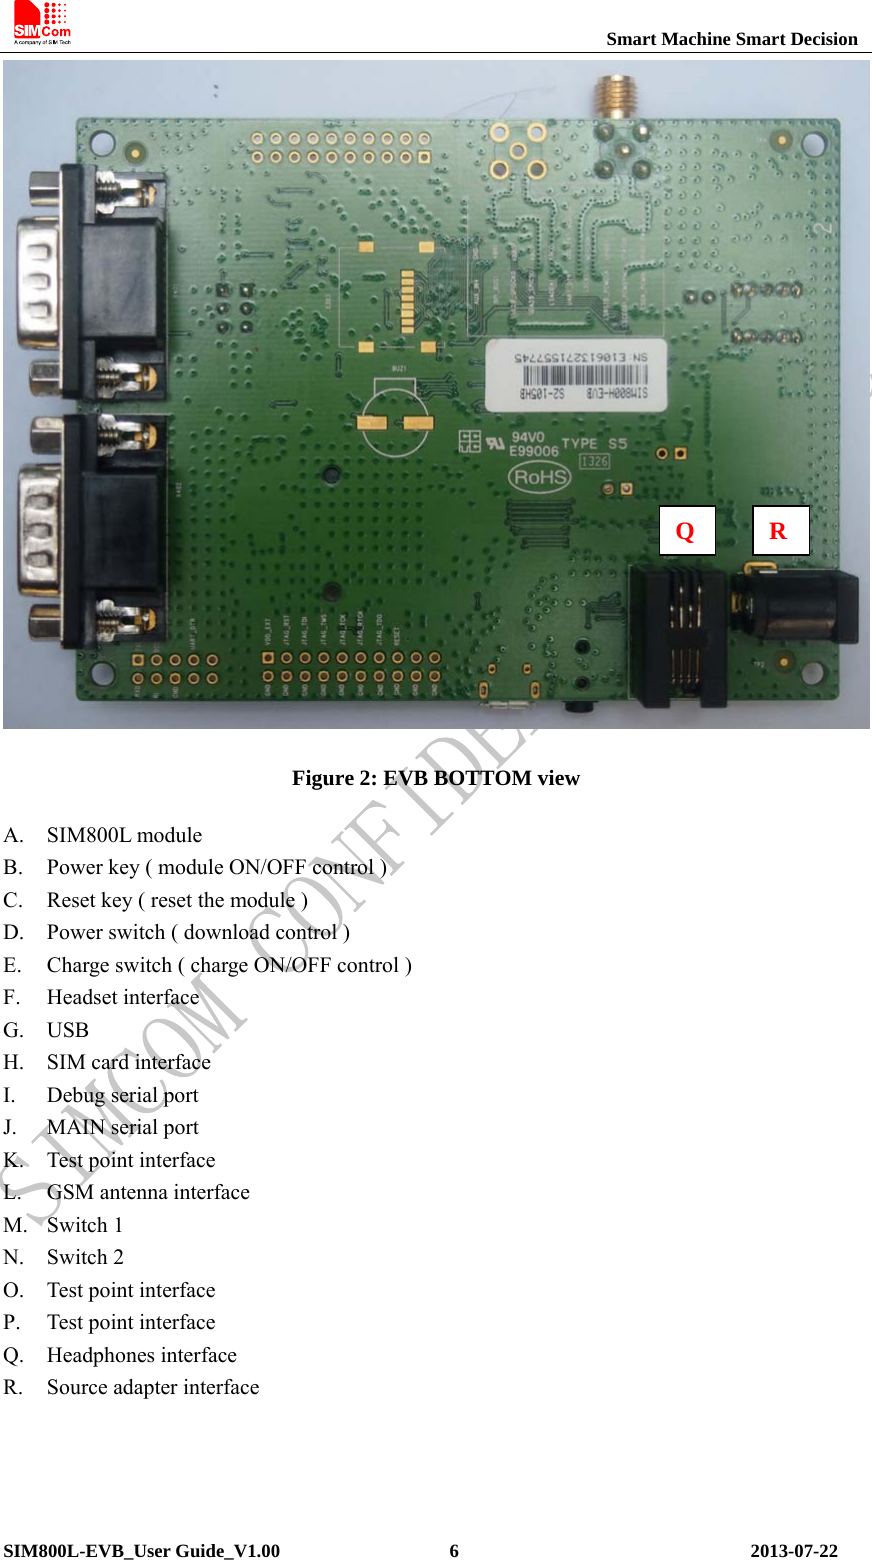                                                          Smart Machine Smart Decision SIM800L-EVB_User Guide_V1.00                  6                               2013-07-22  Figure 2: EVB BOTTOM view A. SIM800L module   B. Power key ( module ON/OFF control )     C. Reset key ( reset the module )     D. Power switch ( download control ) E. Charge switch ( charge ON/OFF control ) F. Headset interface G. USB H. SIM card interface I. Debug serial port J. MAIN serial port K. Test point interface L. GSM antenna interface M. Switch 1 N. Switch 2 O. Test point interface P. Test point interface Q. Headphones interface R. Source adapter interface Q  R 